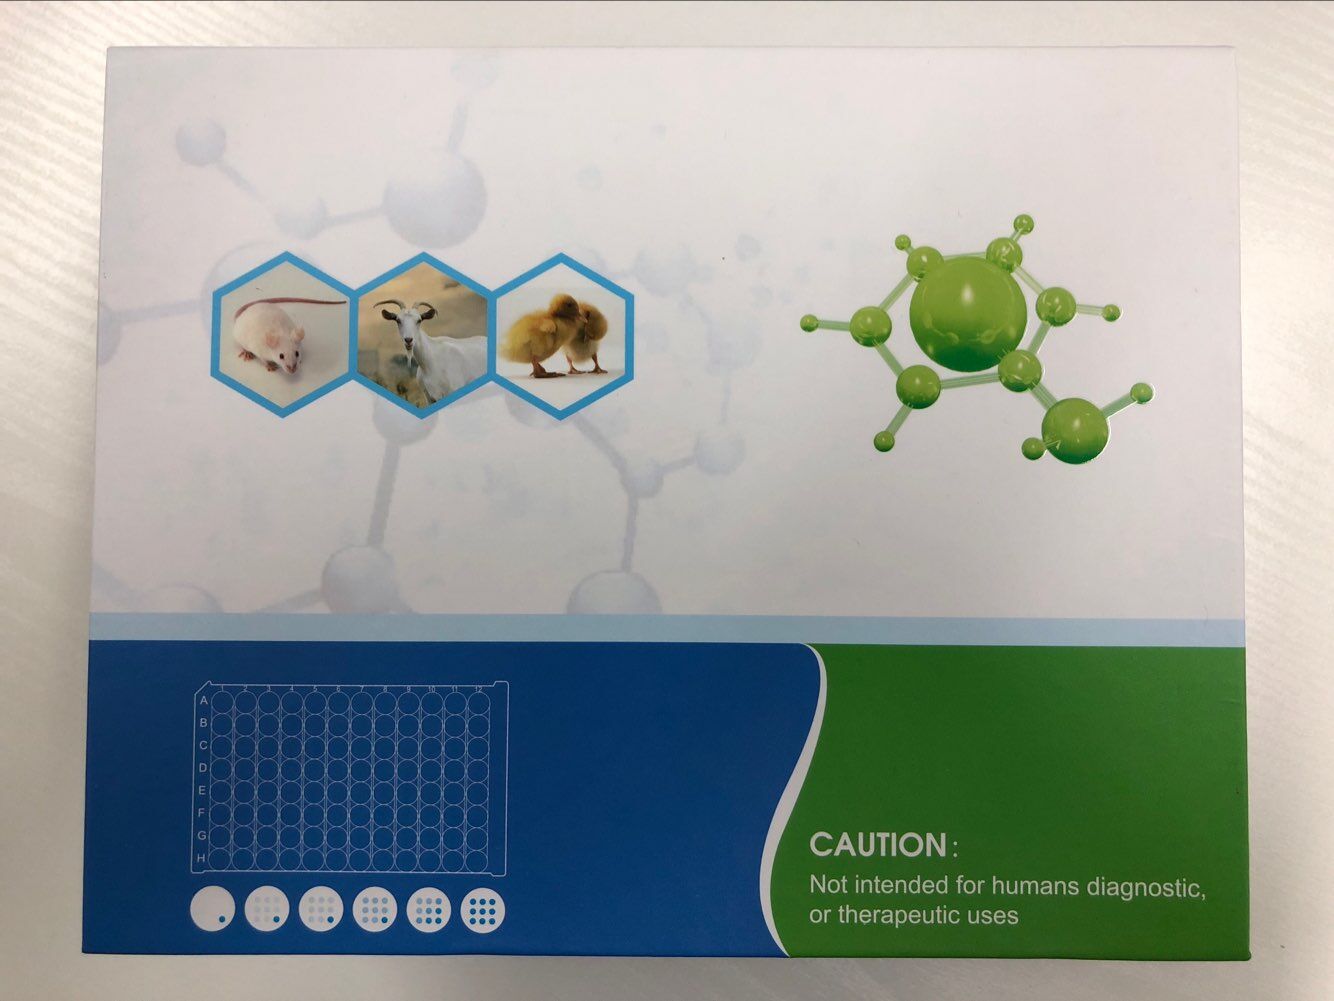 人抗小鼠抗体(HAMA)ELISA试剂盒